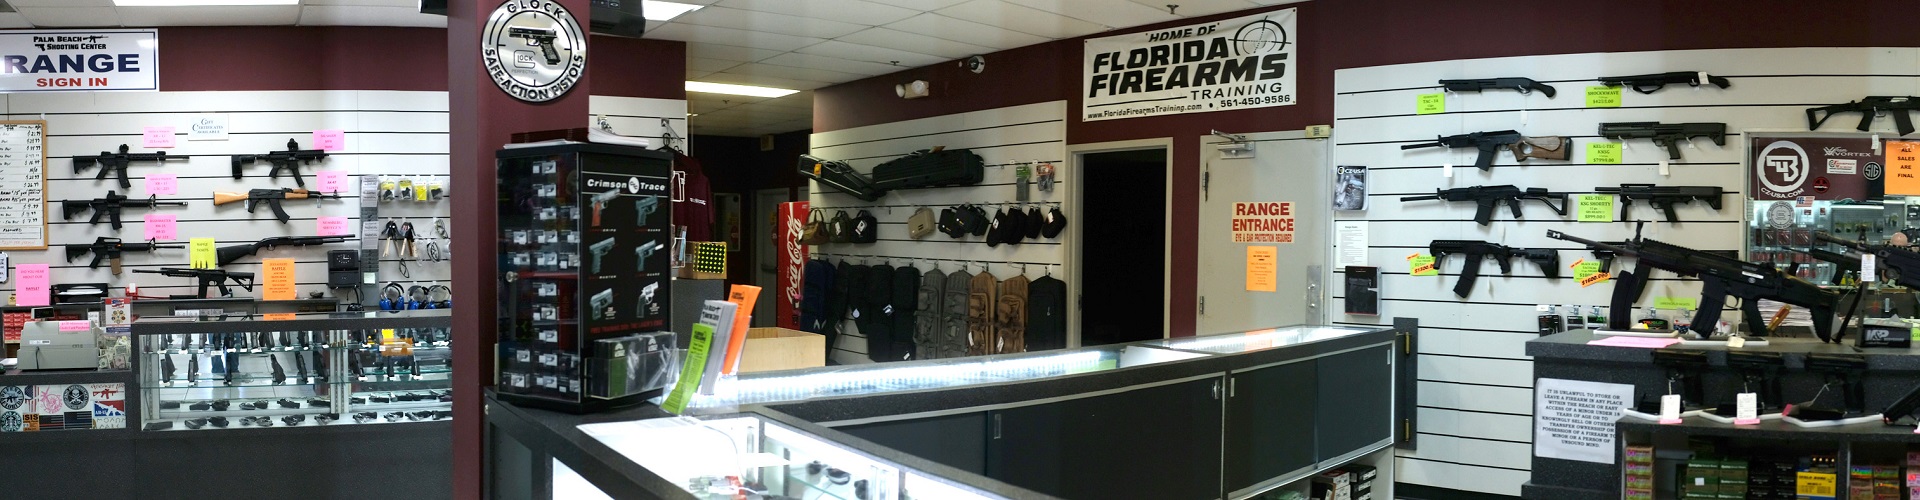 Palm Beach Gun Store, Gun Smith, Shooting Range, Ammunition Sales